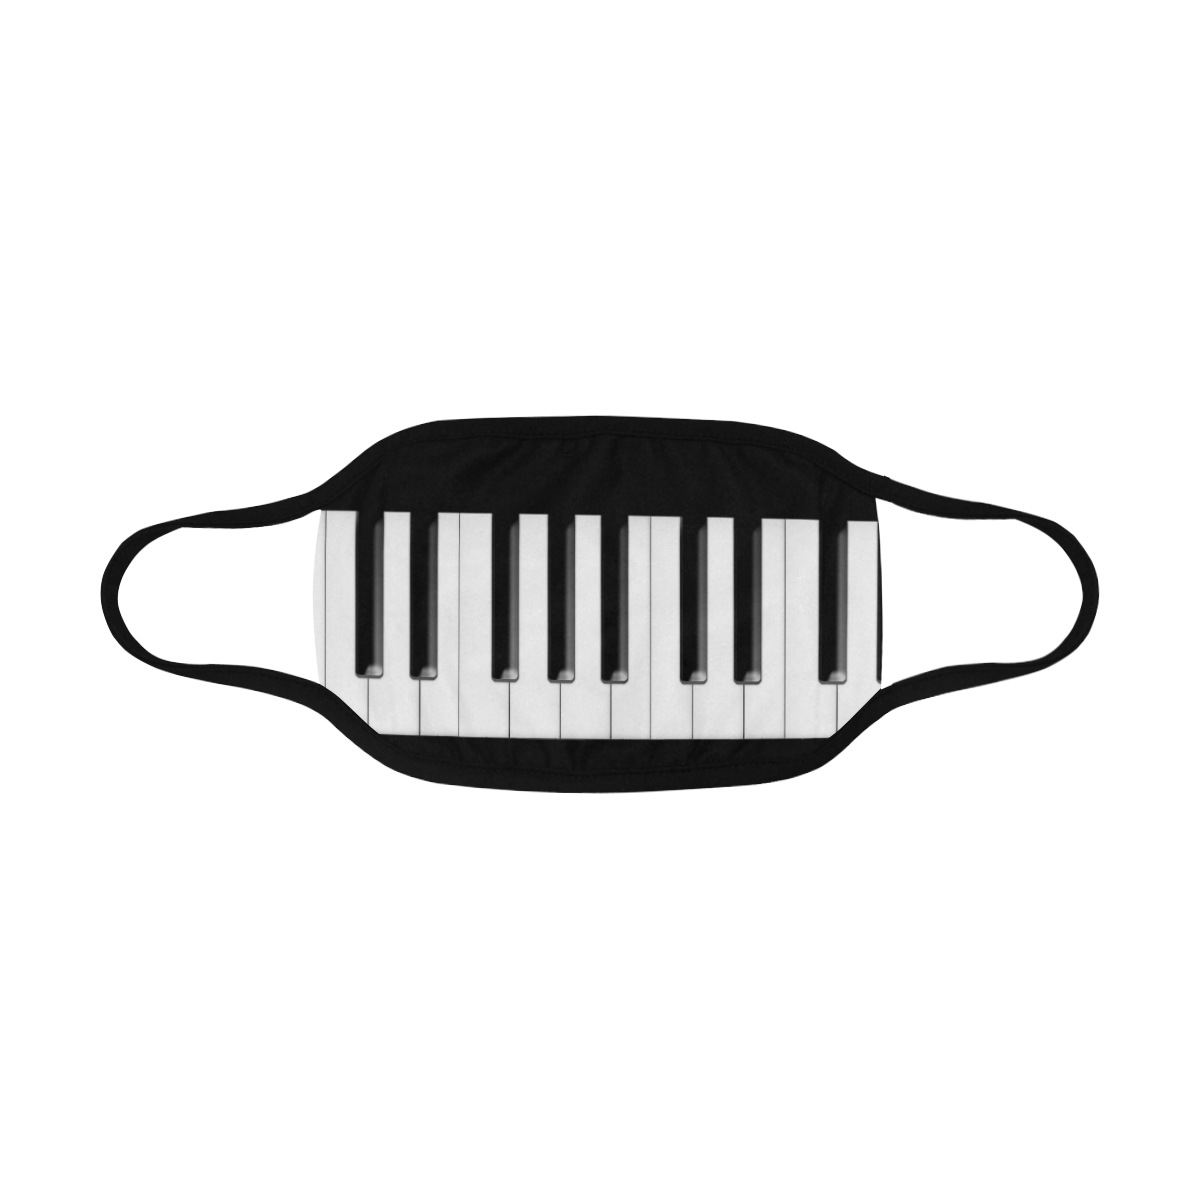 Piano Mouth Mask